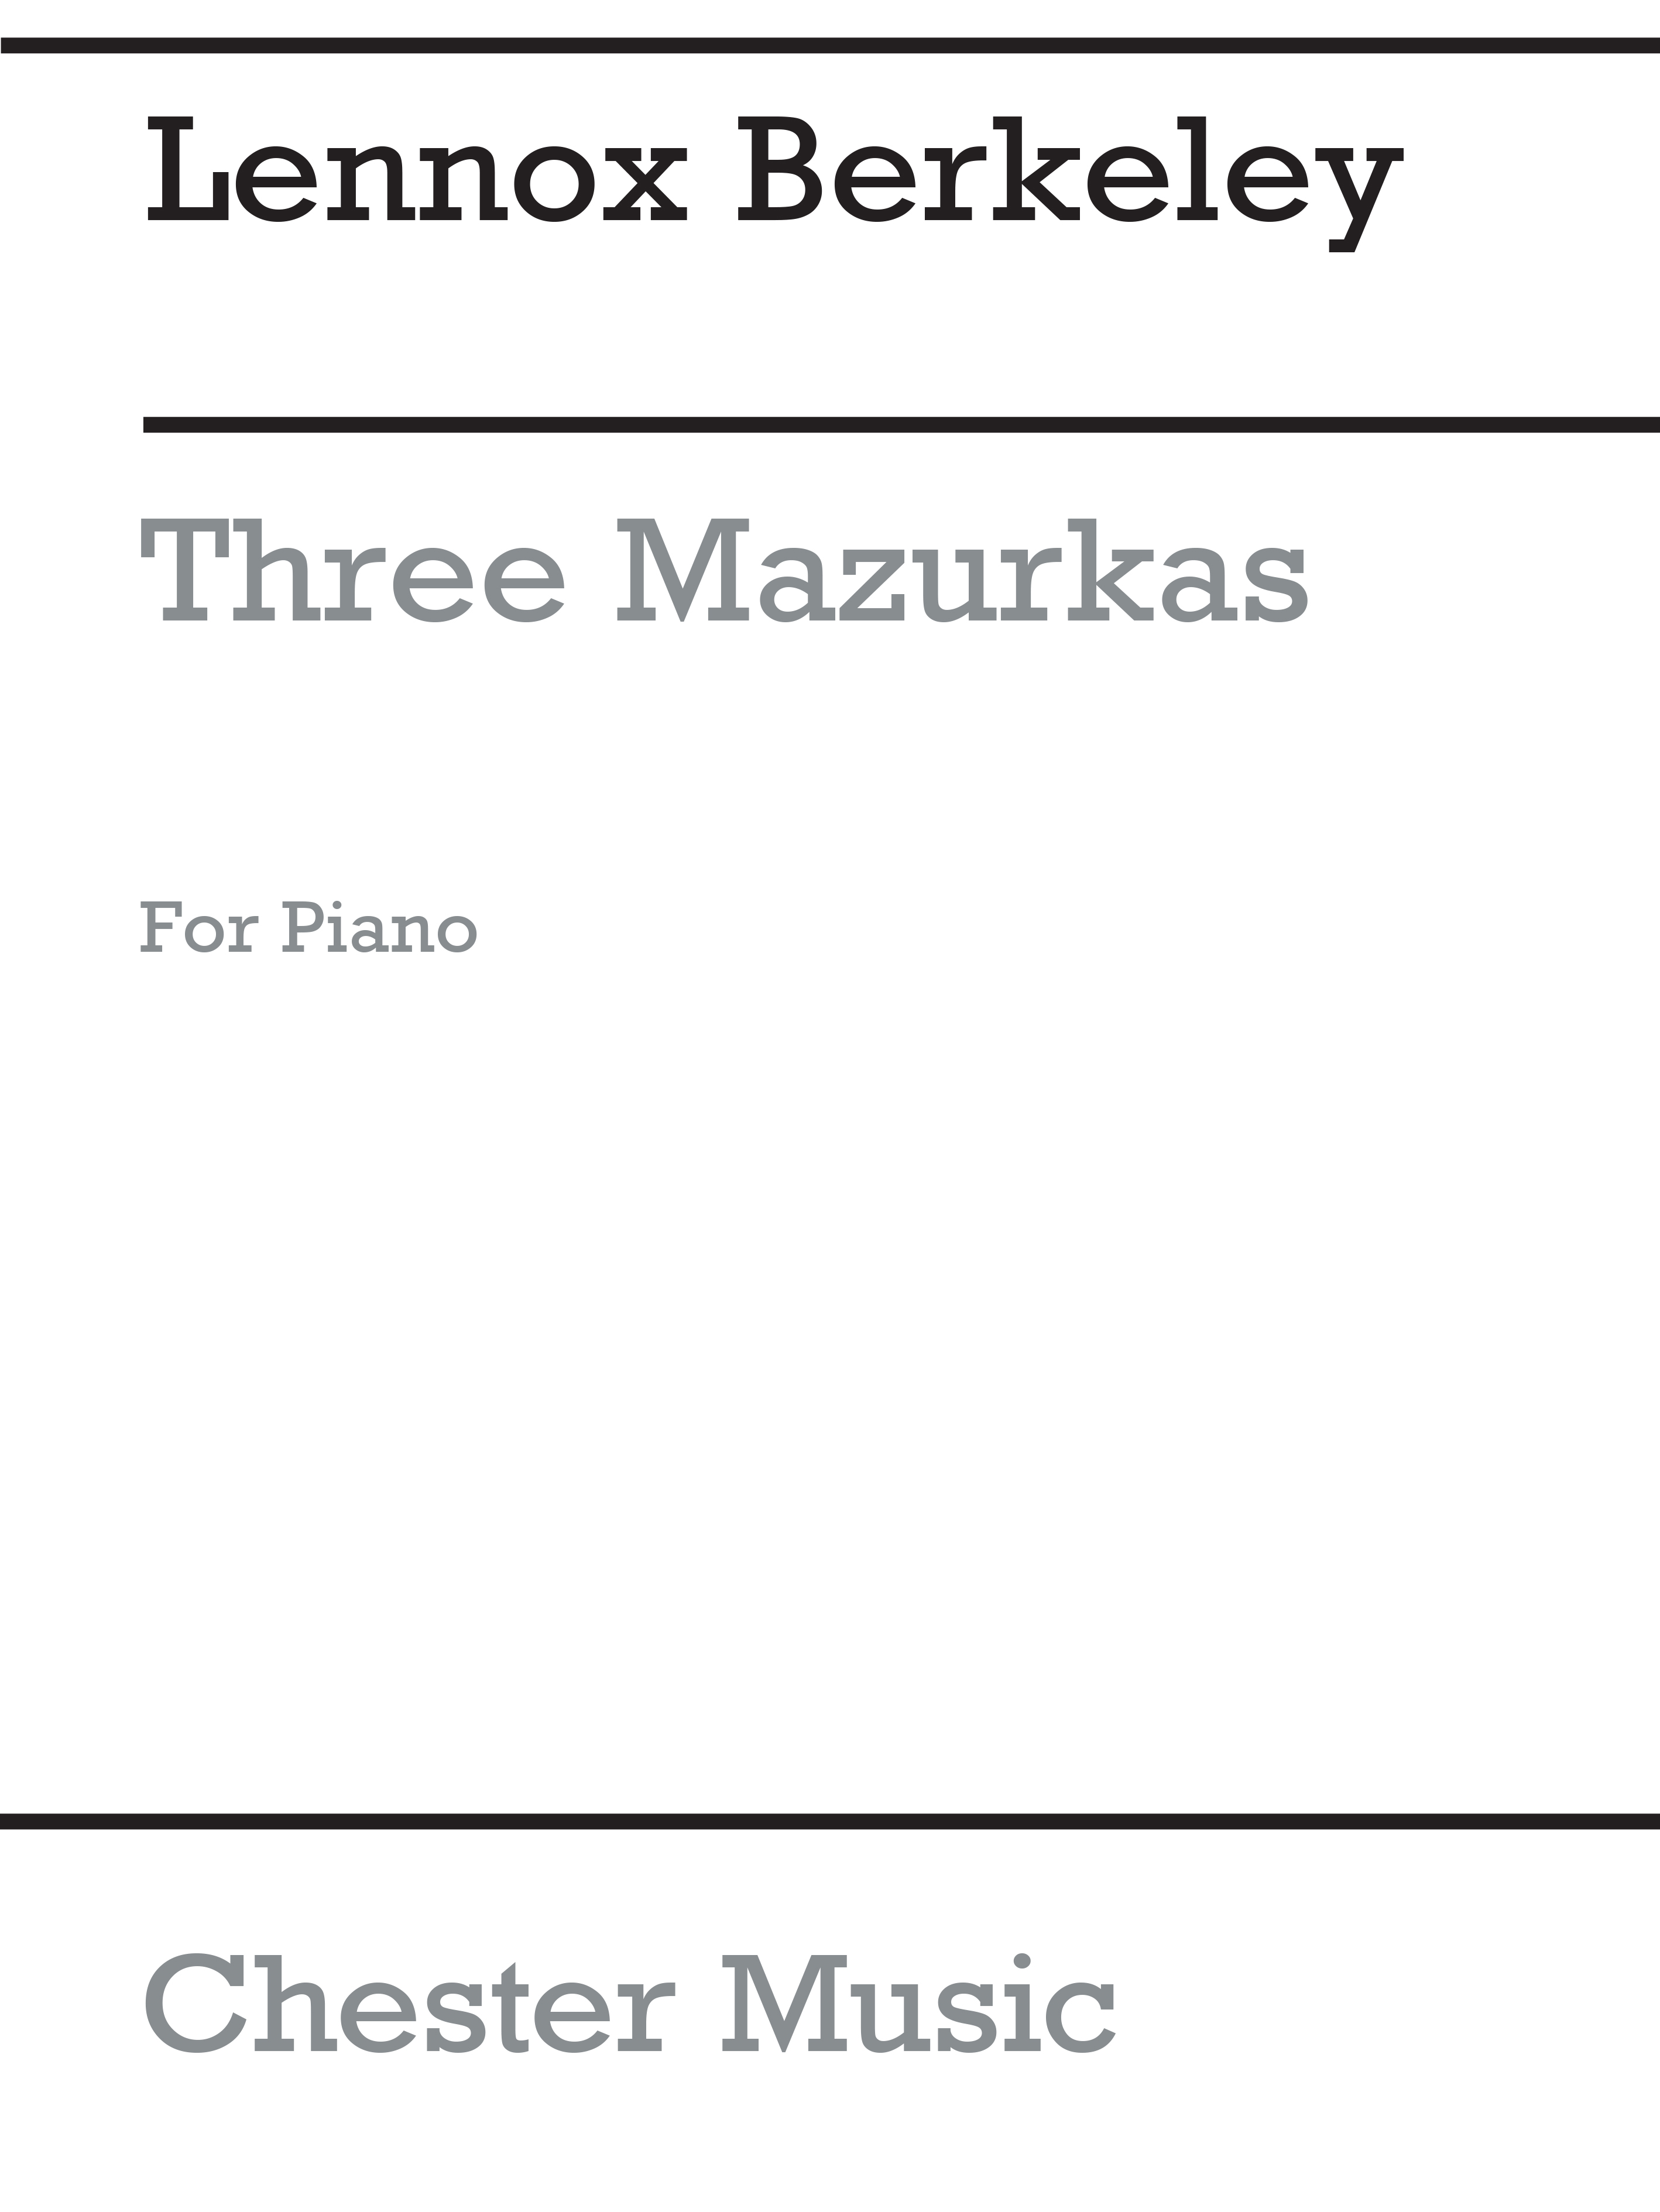 Lennox Berkeley: Three Mazurkas For Piano Op.32 No. 1: Piano: Instrumental Work